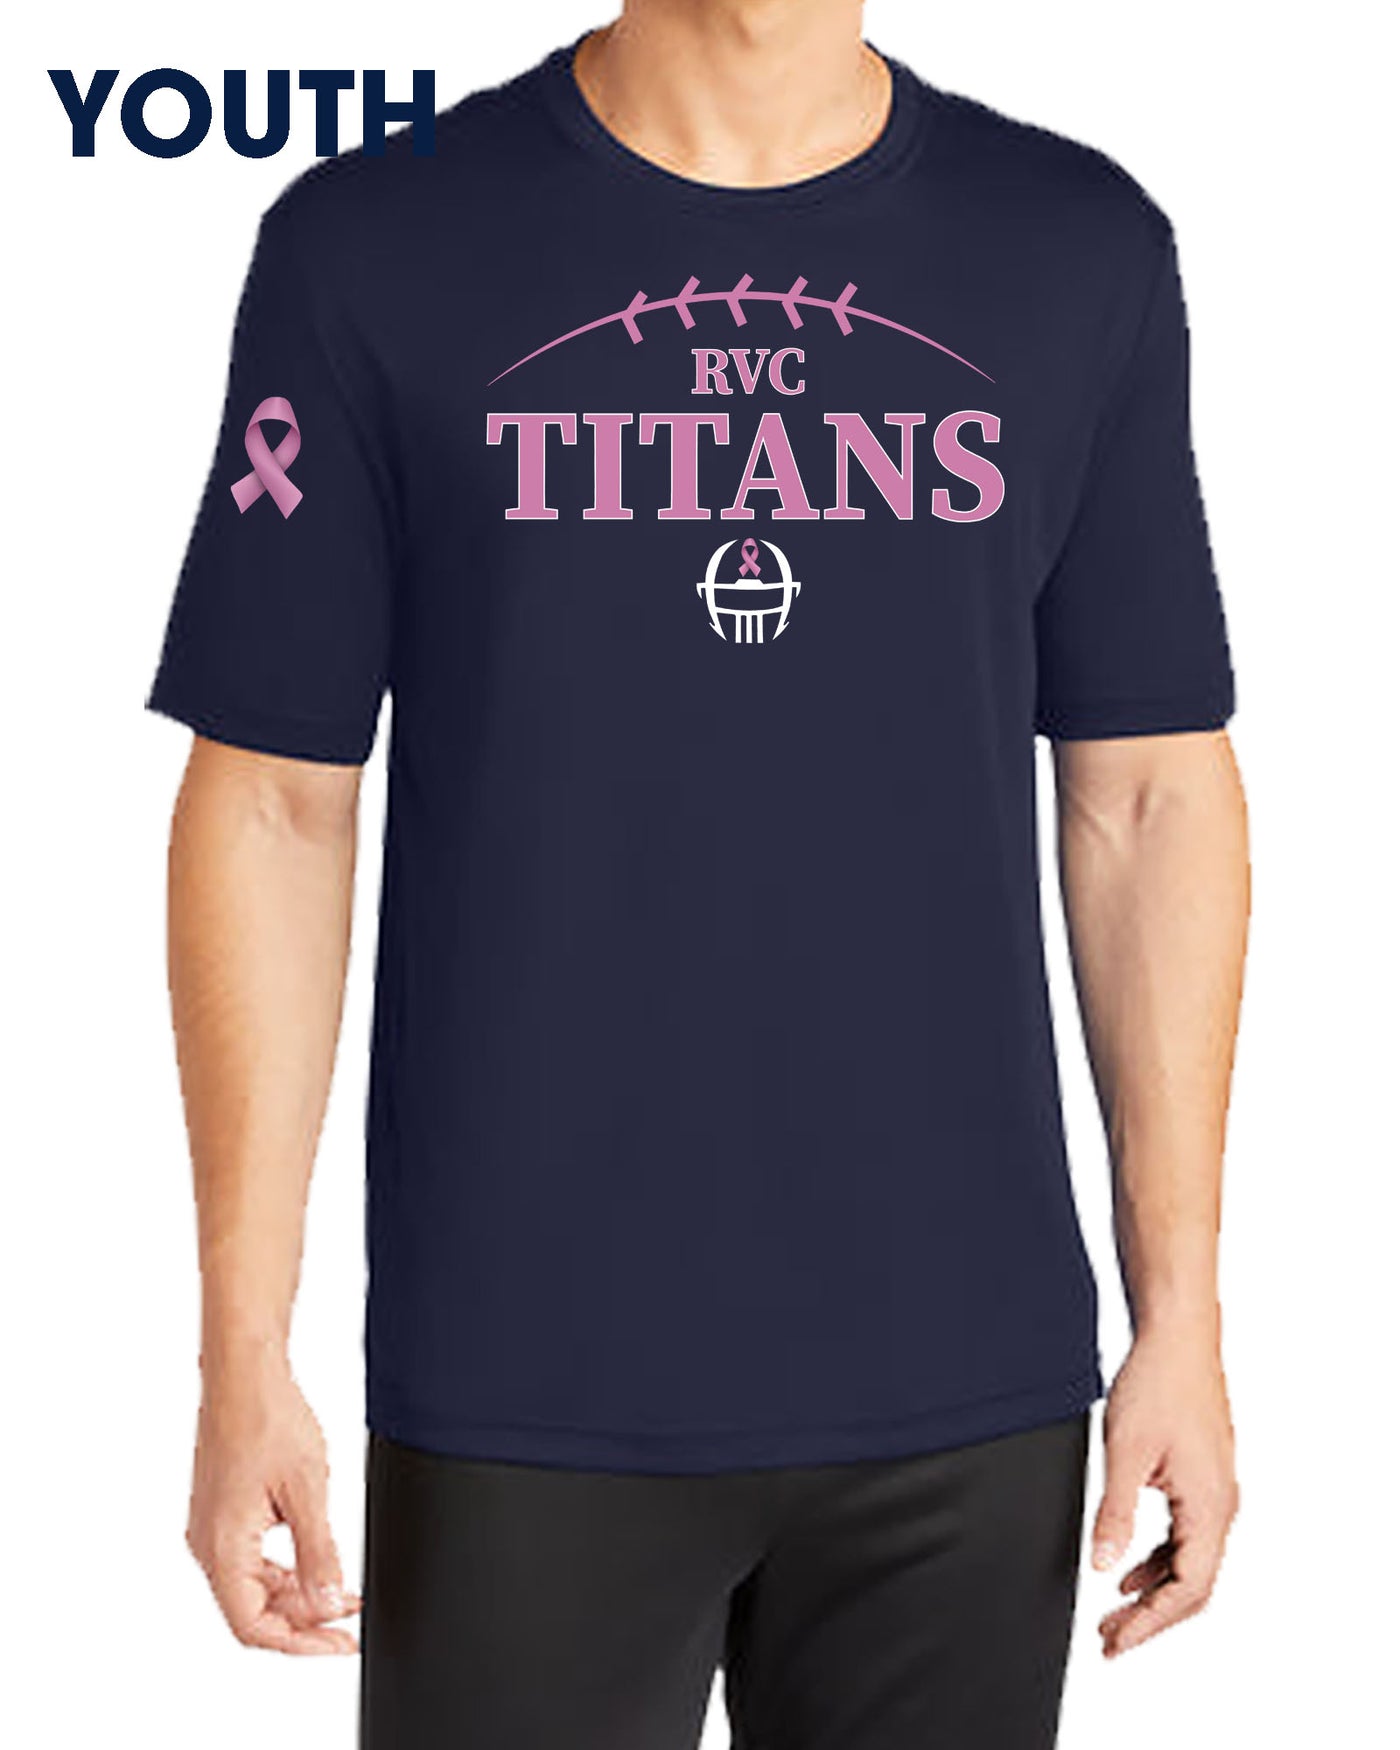 YOUTH Titans Awareness Short Sleeve T Shirt